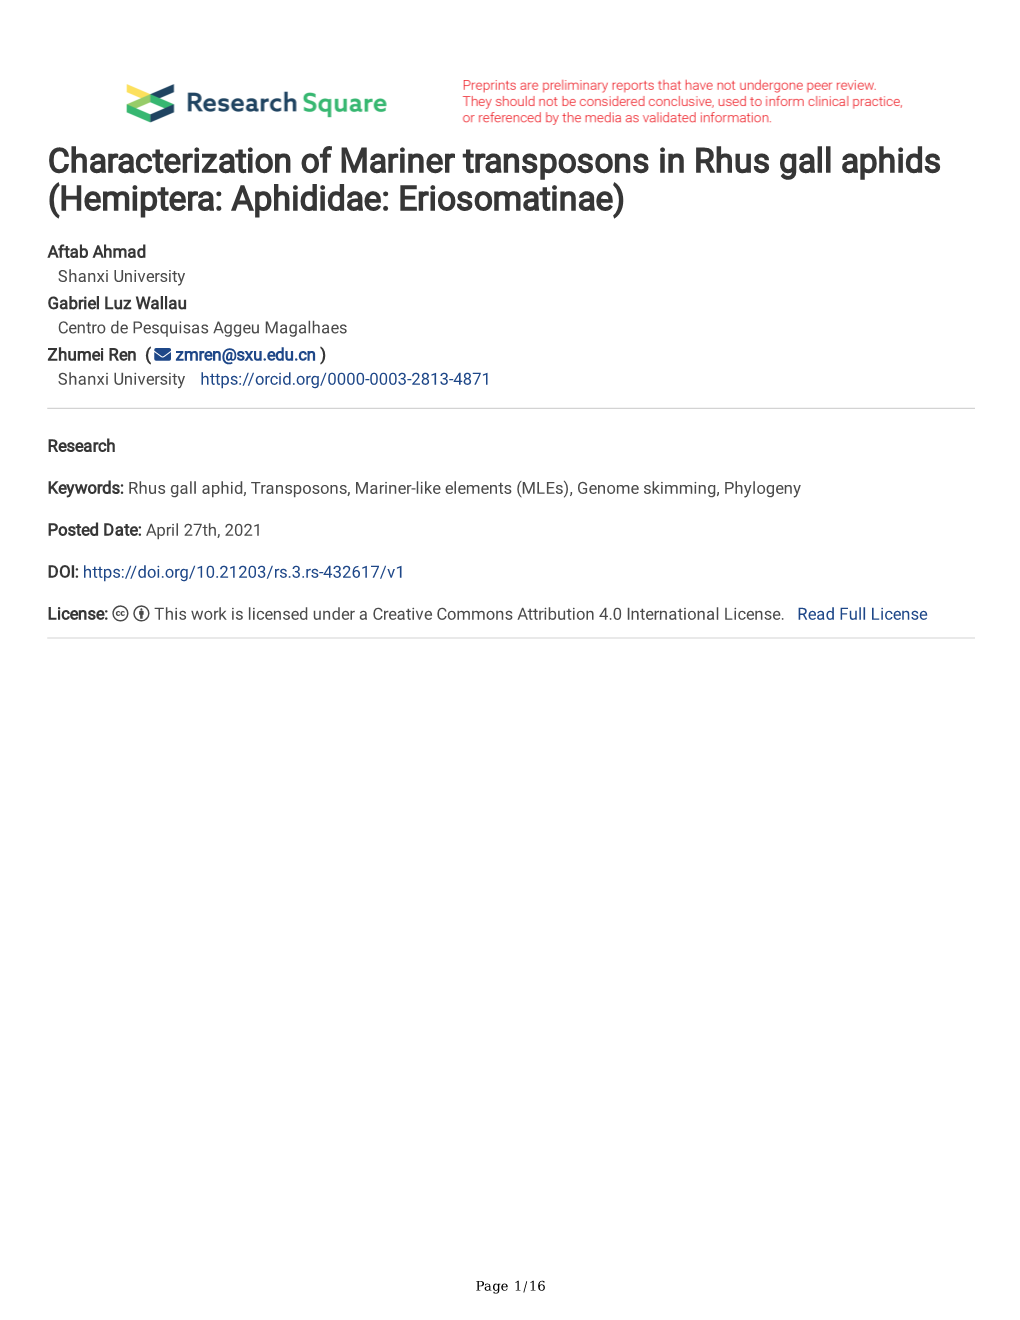 Characterization of Mariner Transposons in Rhus Gall Aphids (Hemiptera: Aphididae: Eriosomatinae)